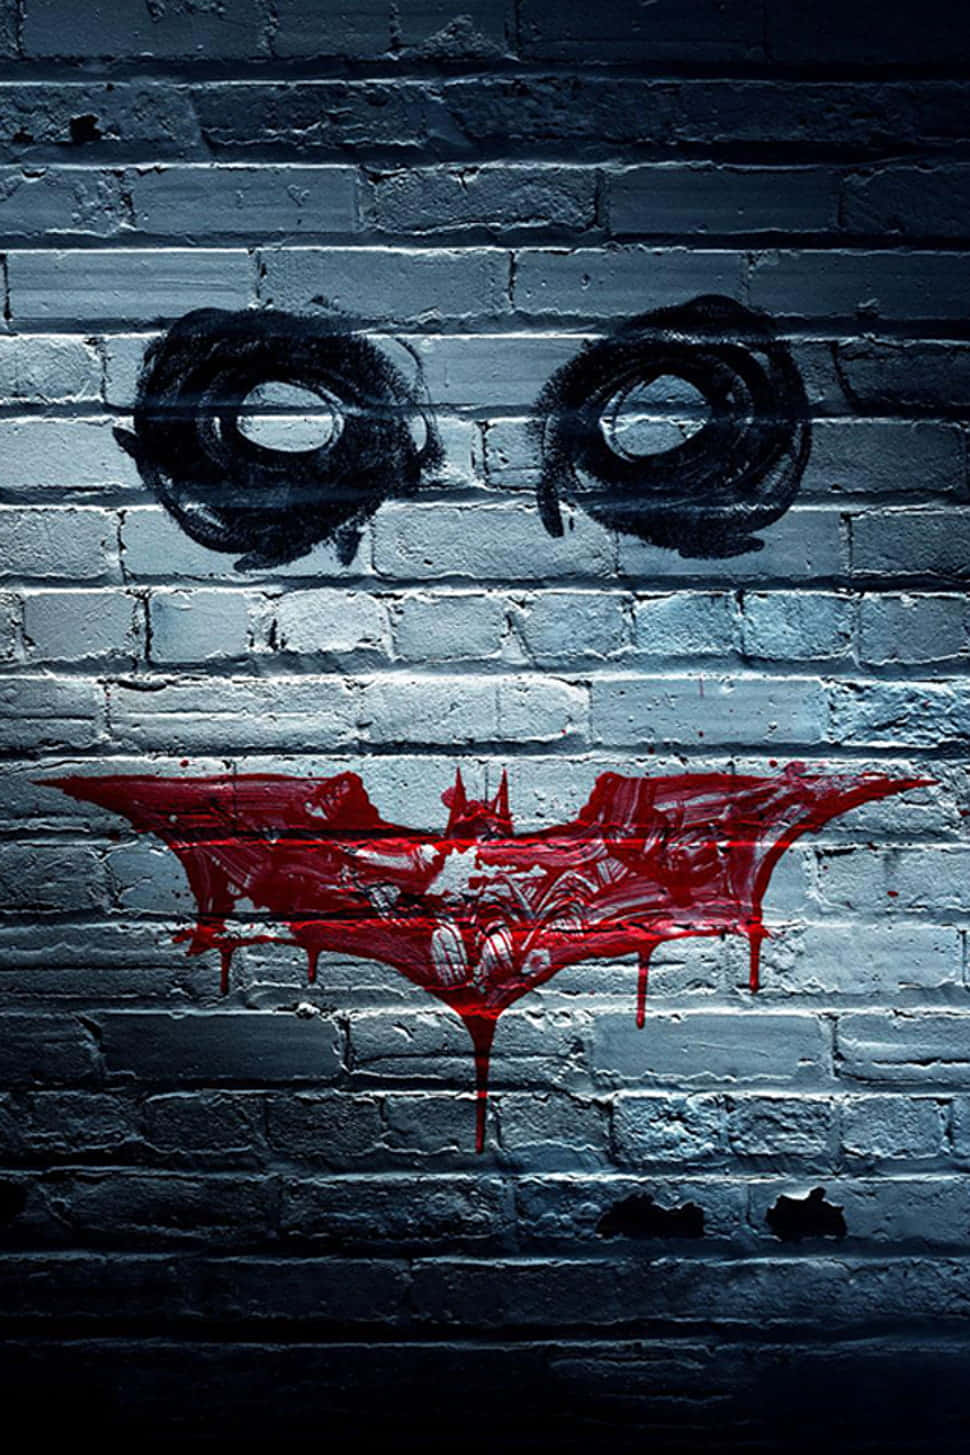 The iconic Red Batman Logo Wallpaper